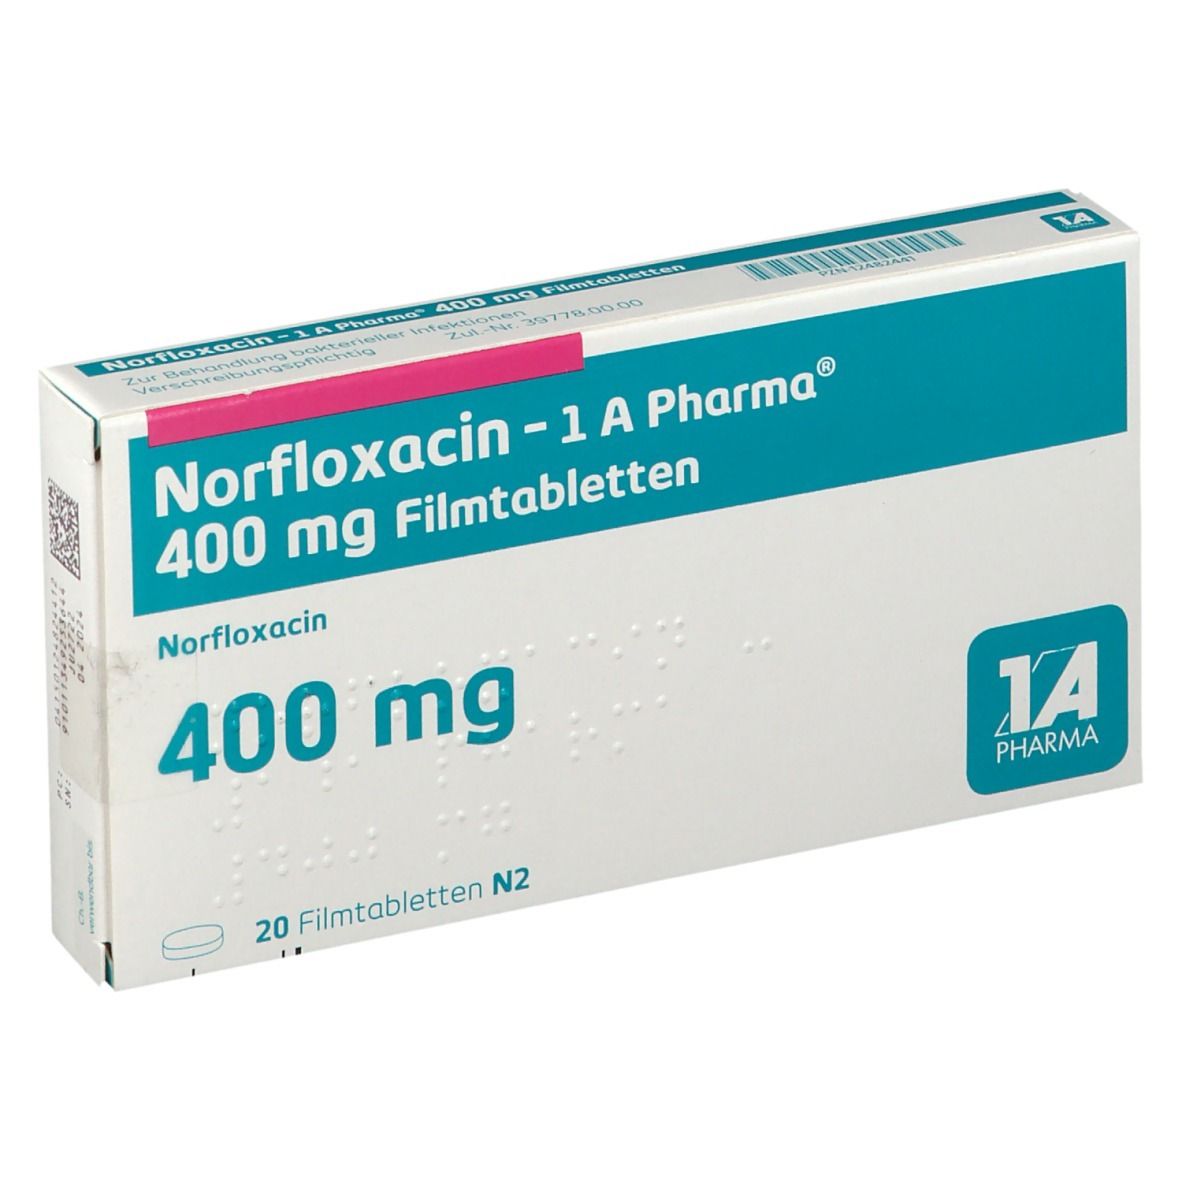 Norfloxacin - 1 A Pharma® 400 mg